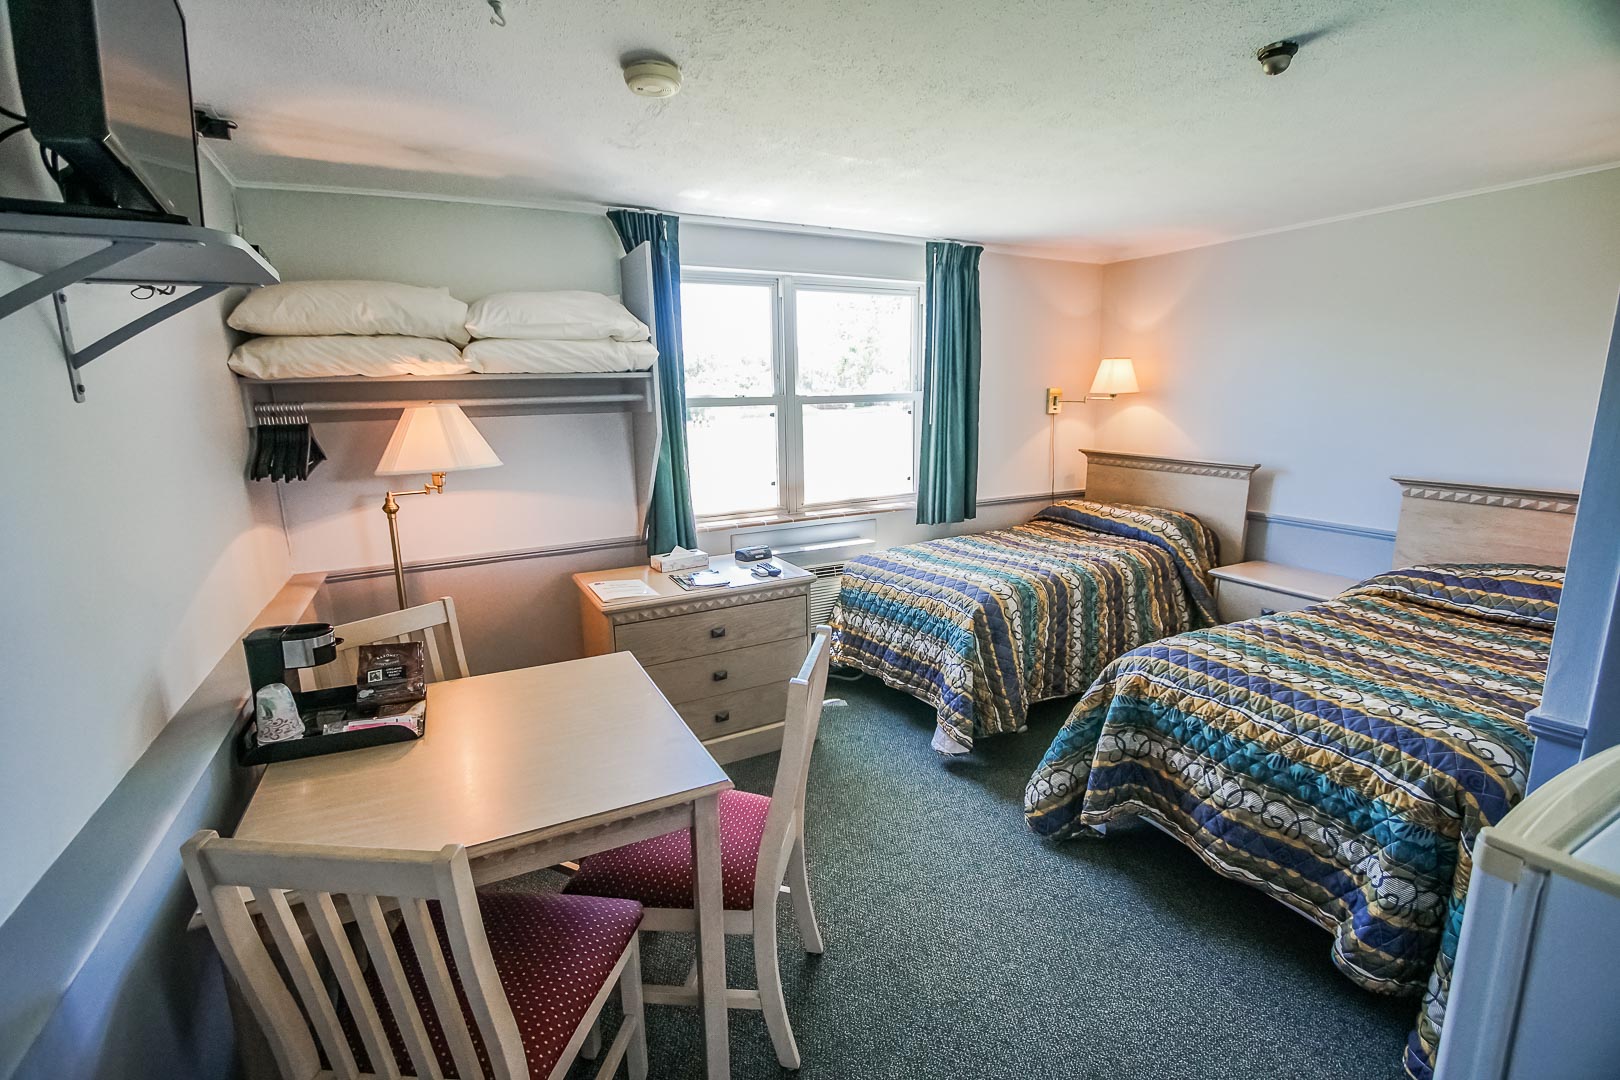 A cozy bedroom with double beds at VRI's Harbor Landing Resort in Massachusetts.